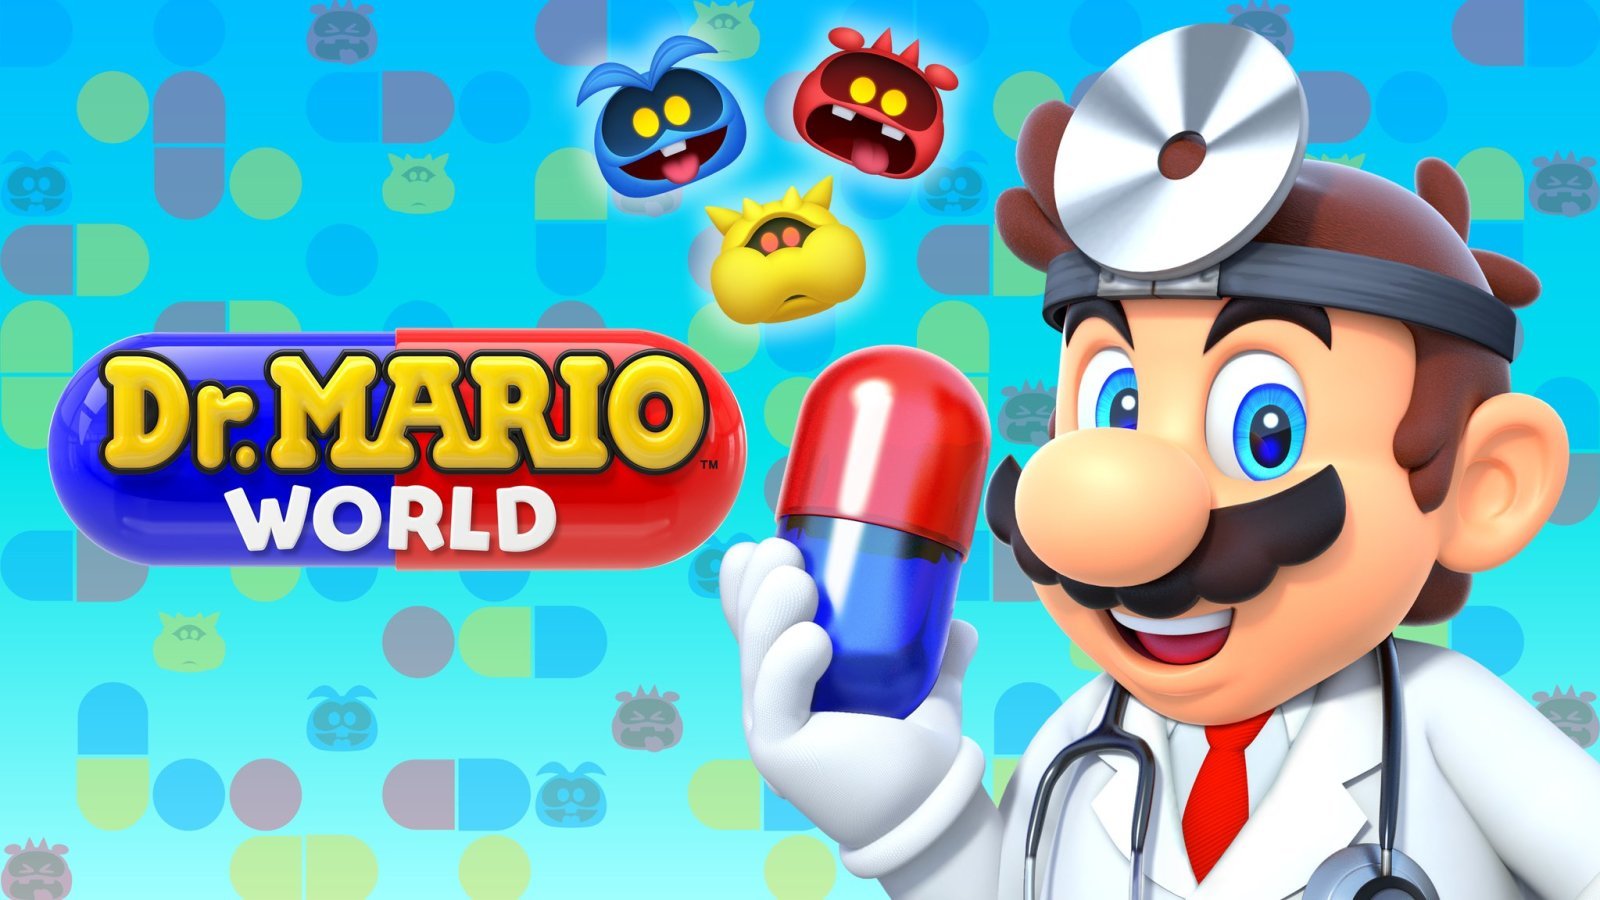 Dr. Mario World is Shutting Down on November 1